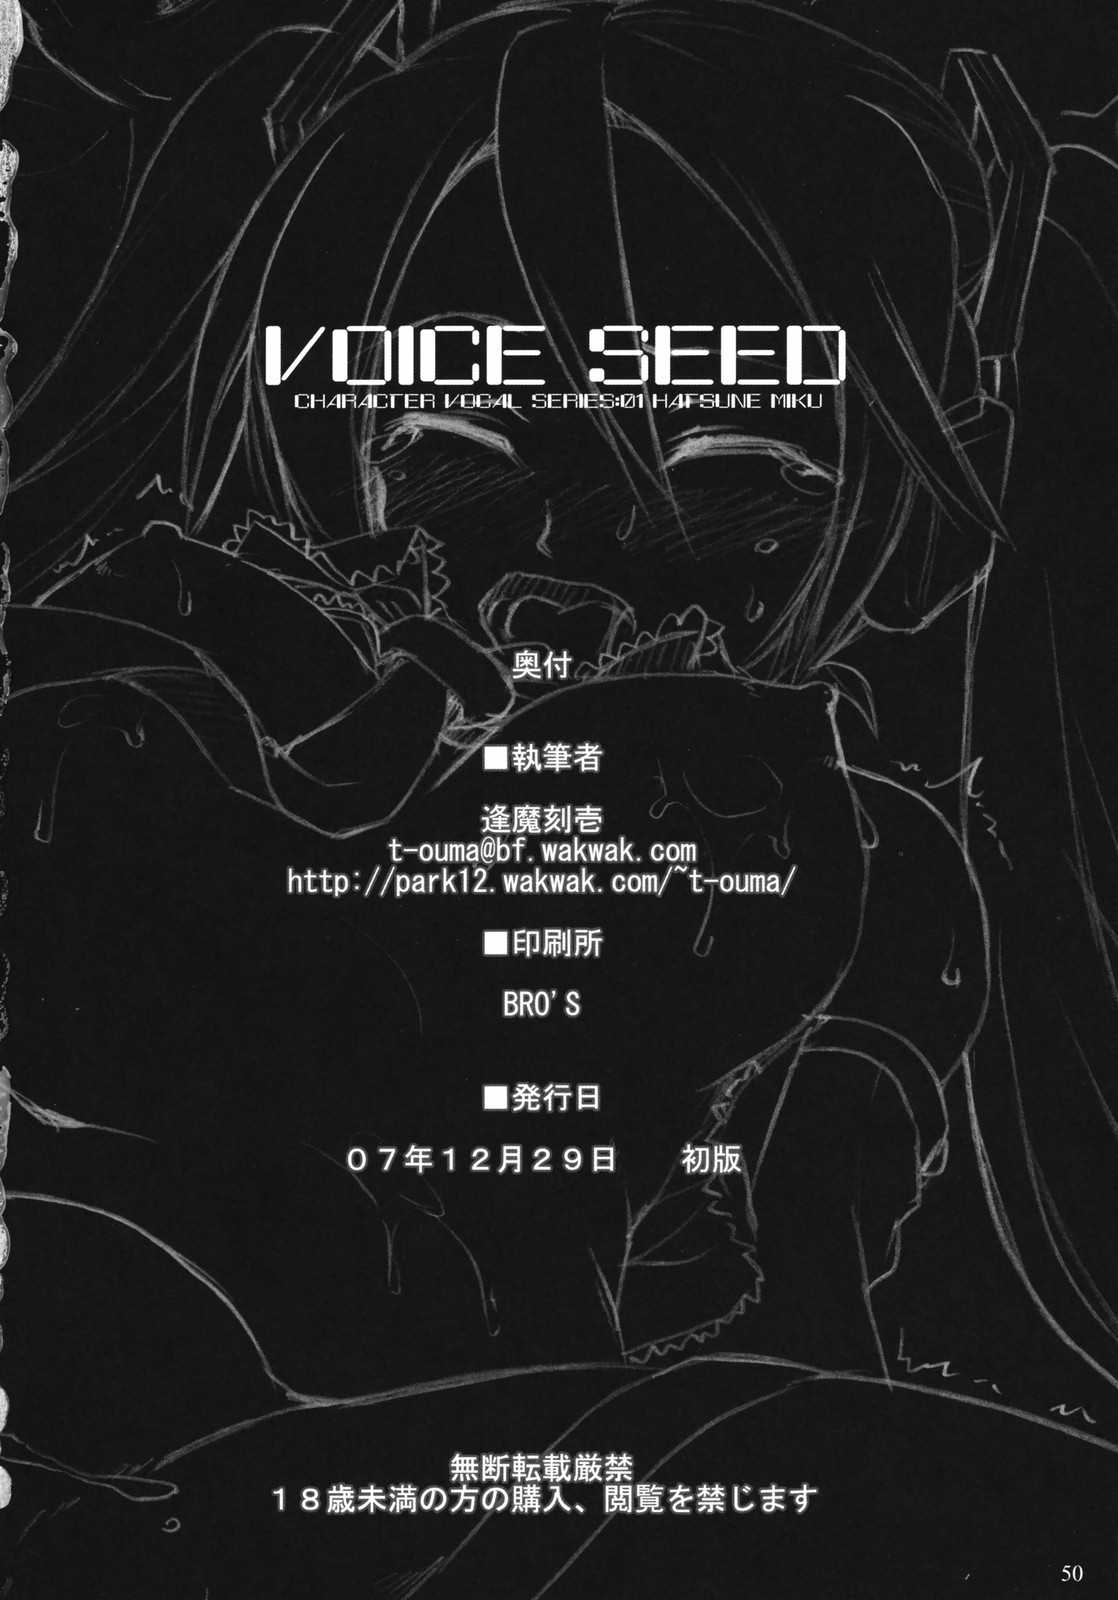 [Shimoyakedou] VOICE SEED (Vocaloid){masterbloodfer} 